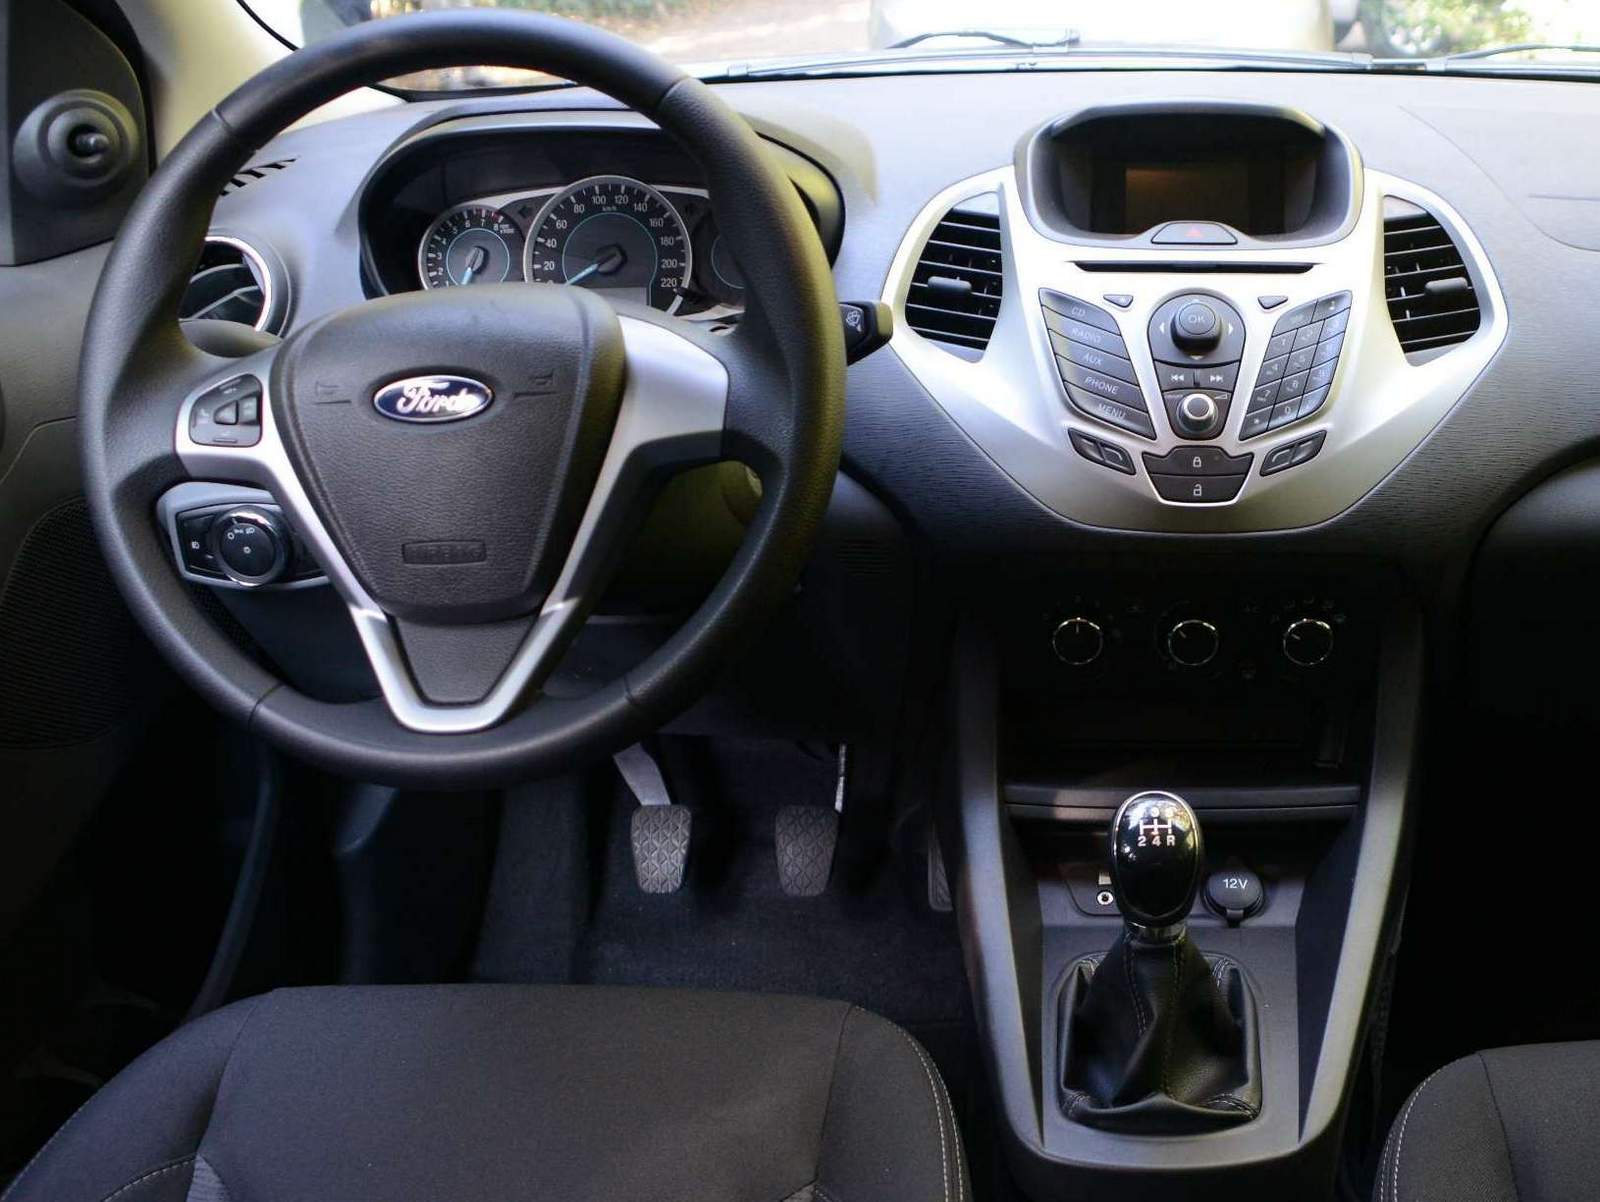 Novo Ford Ka 2015 - interior